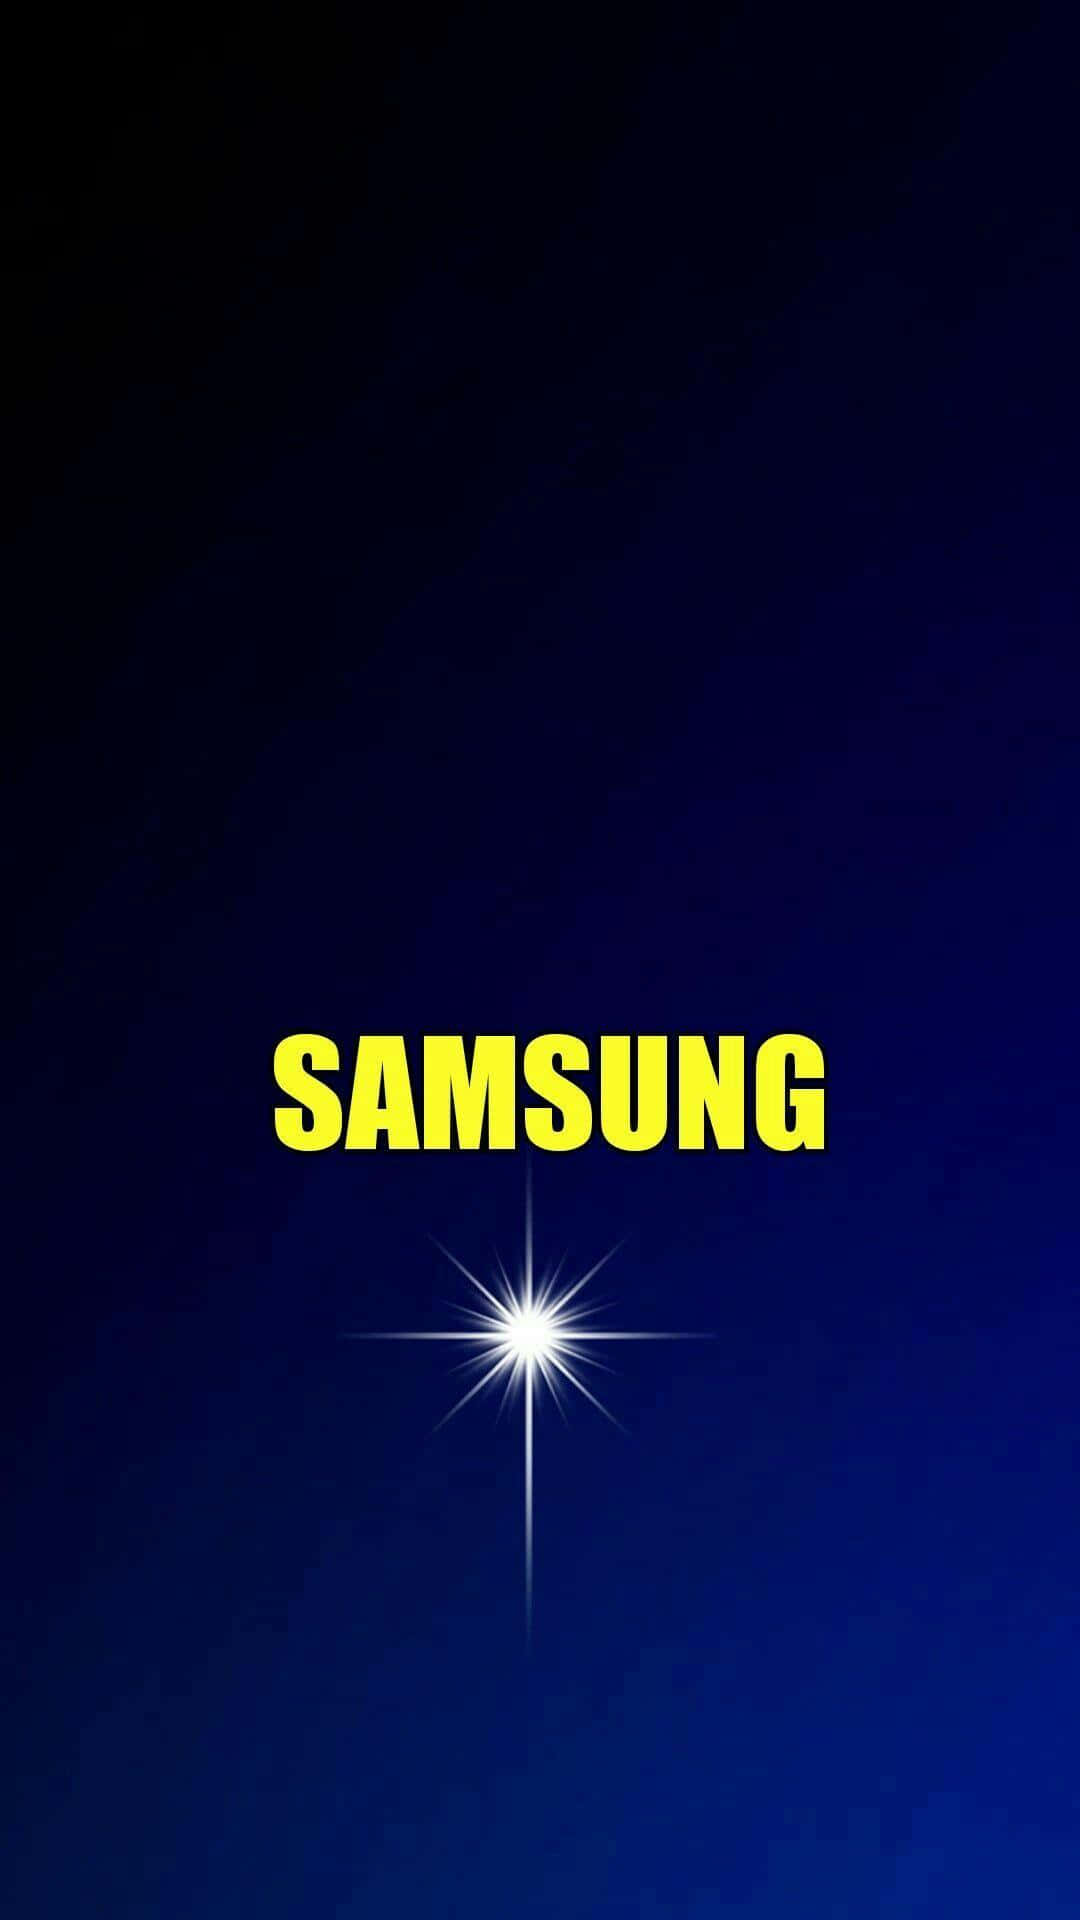 Samsung Full HD Wallpapers - Wallpaper Cave